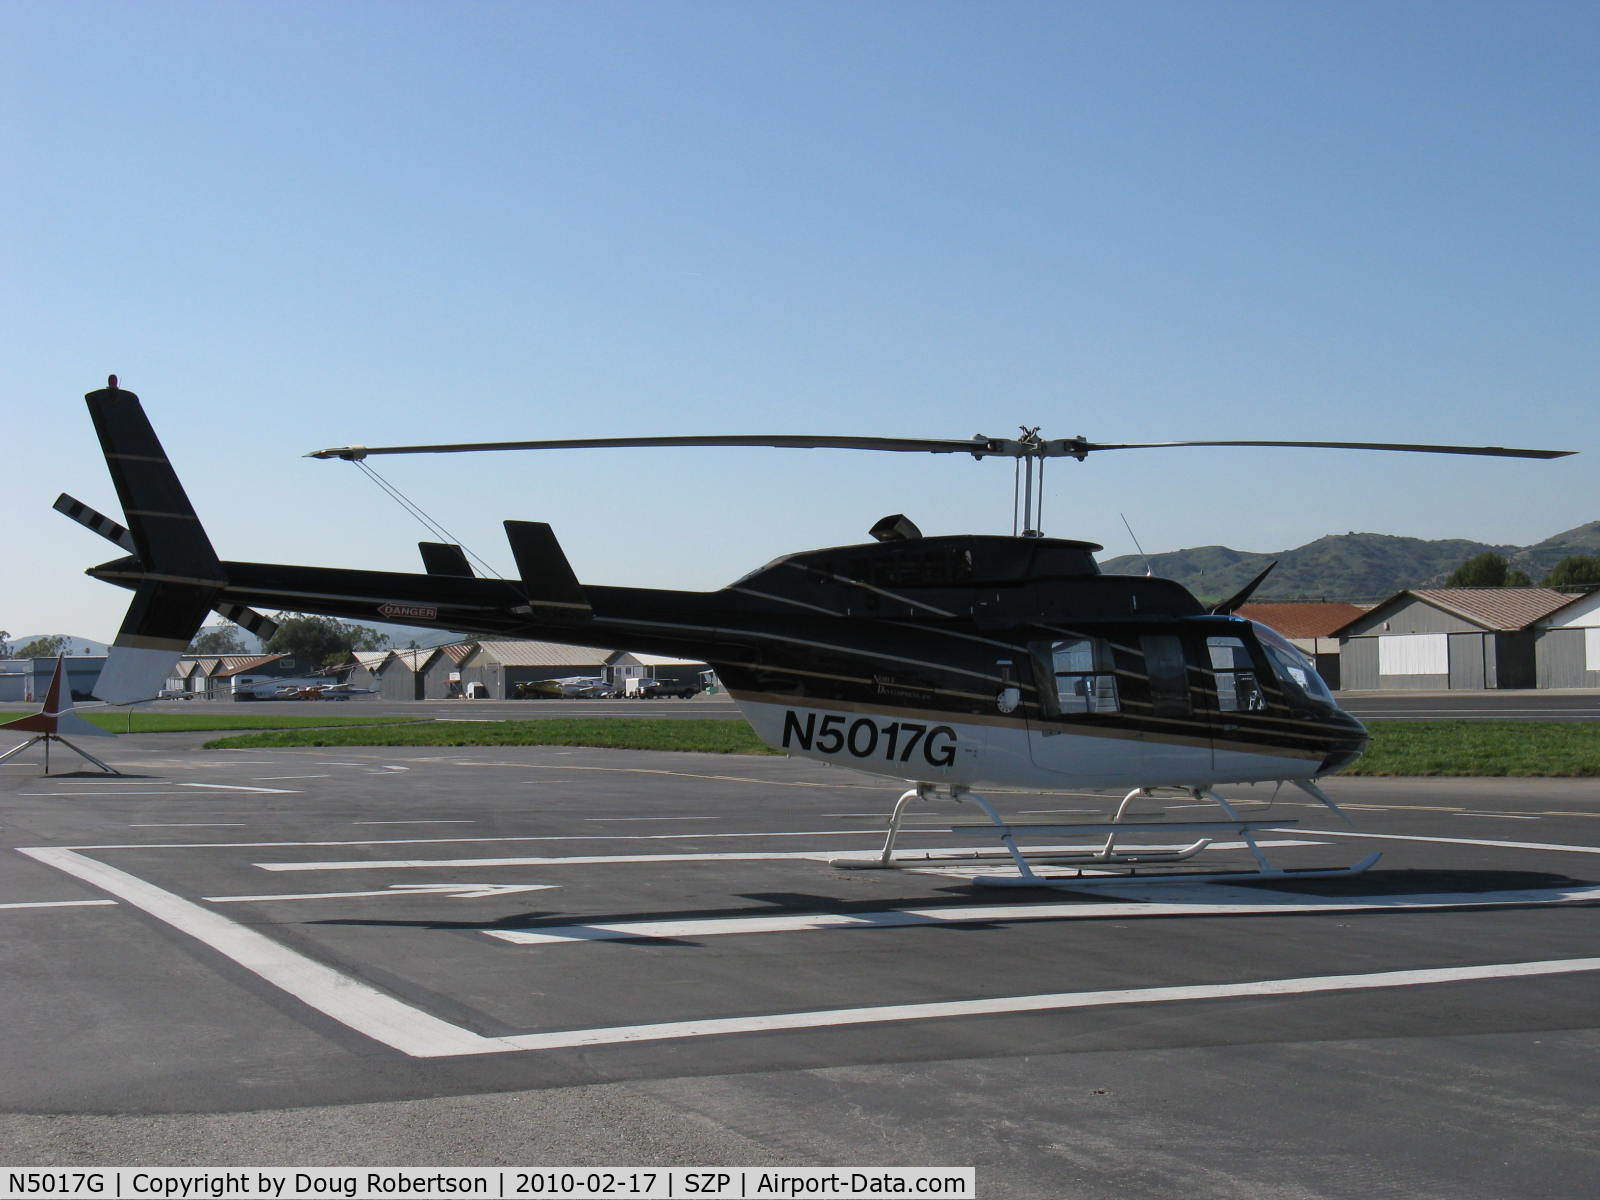 N5017G, Bell 206L-1 LongRanger II C/N 45228, 1979 Bell Textron 206L-1 JETRANGER III, allison 250-C20B 420 shp flat rated at 317 shp, 7 place